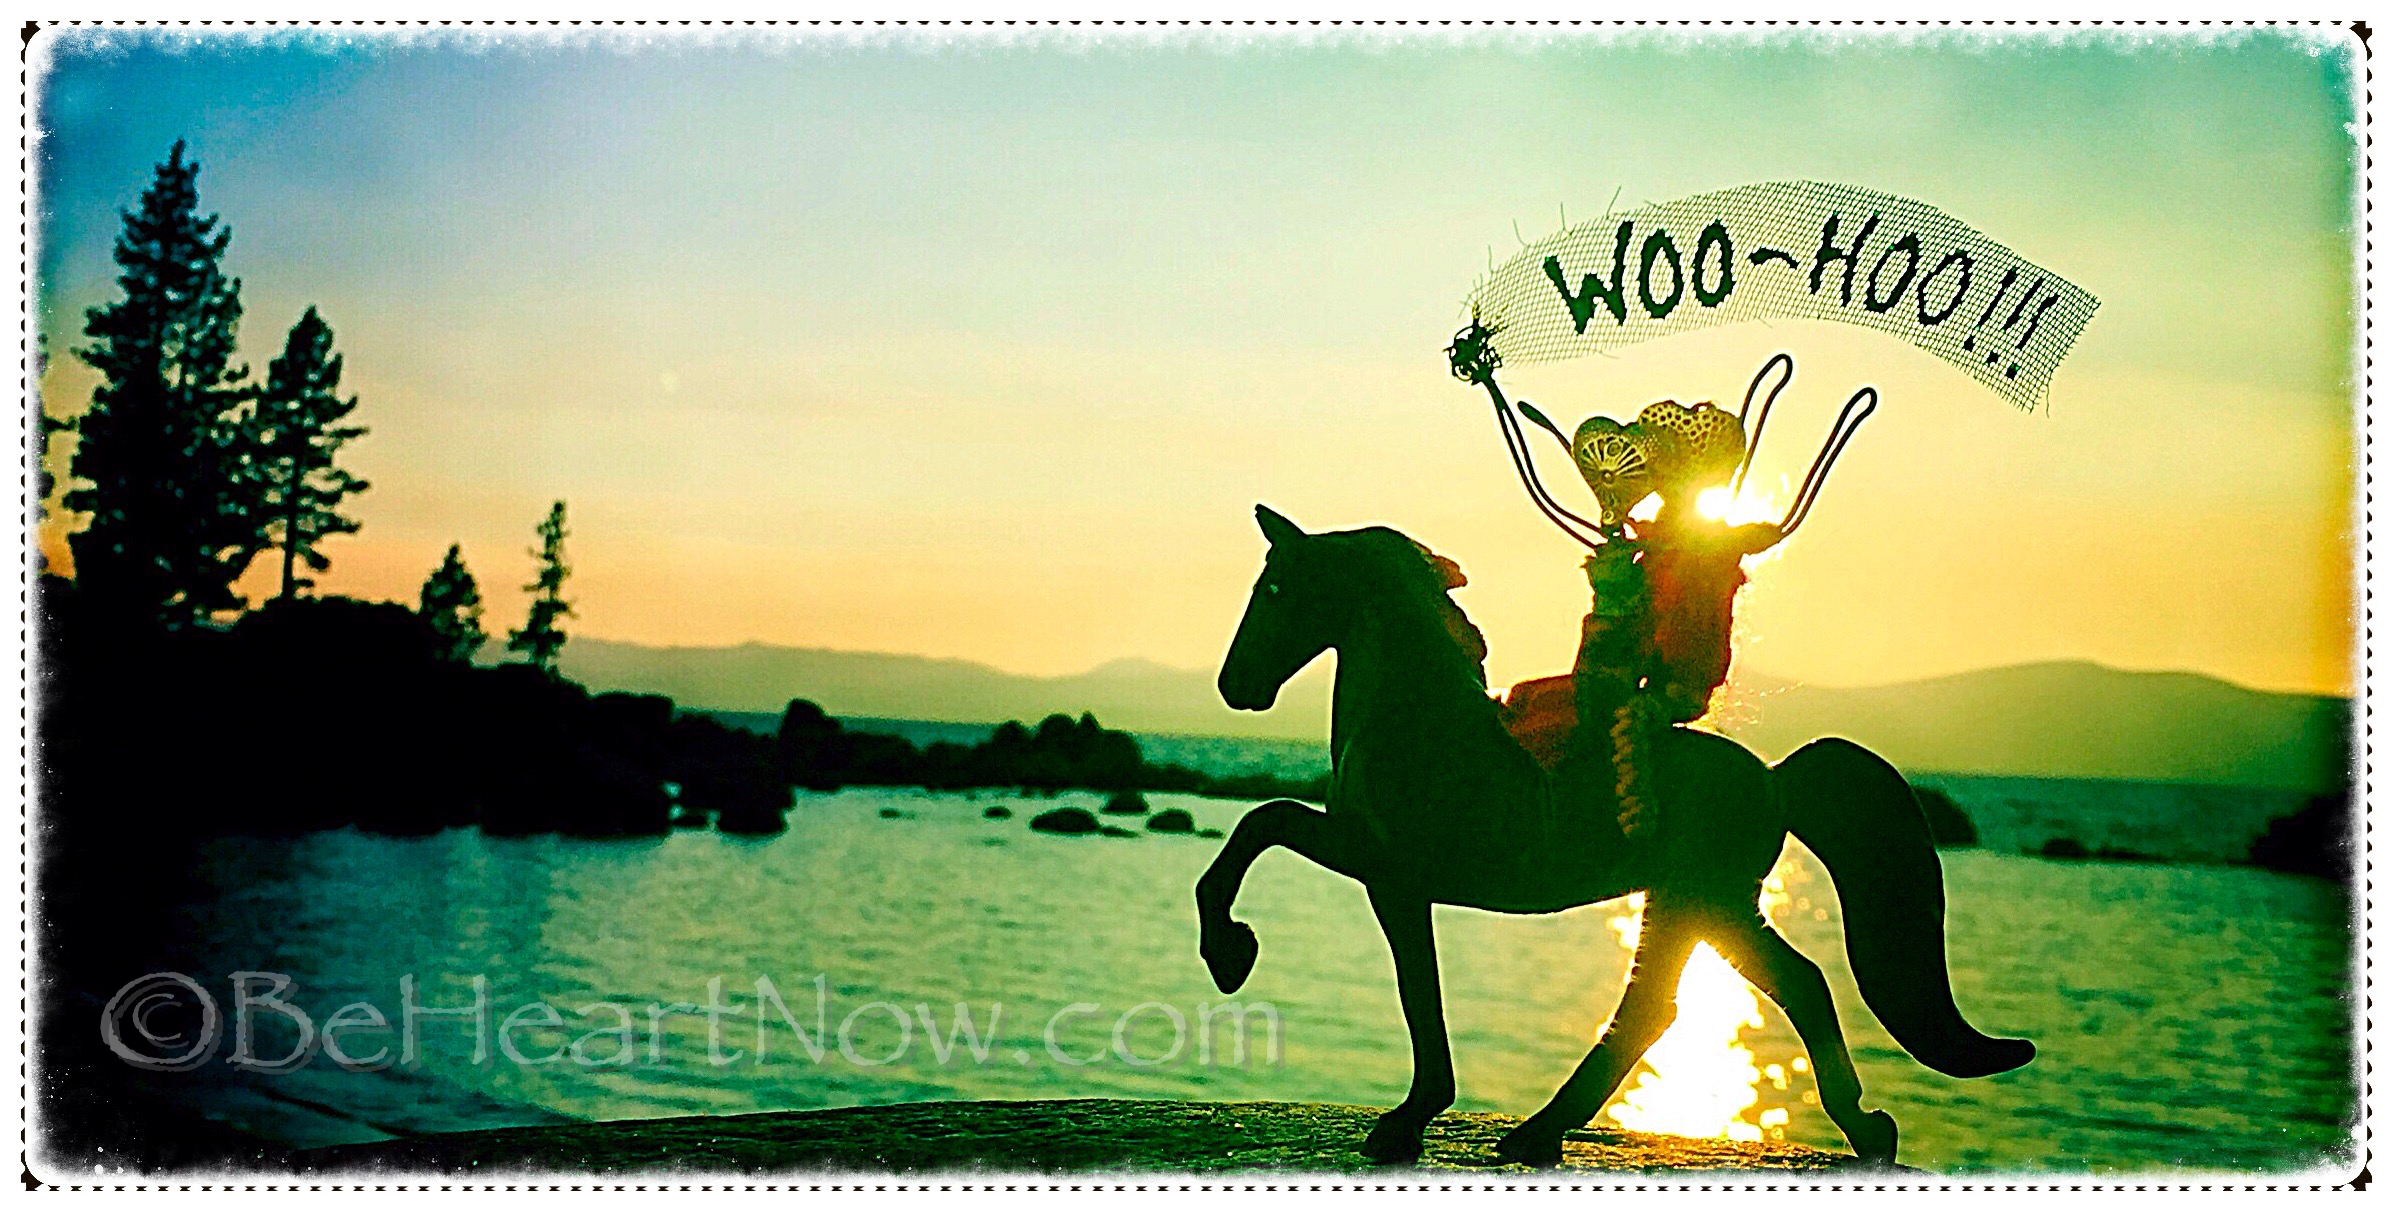 Copy 4x4 horse woohoo sunset.JPG